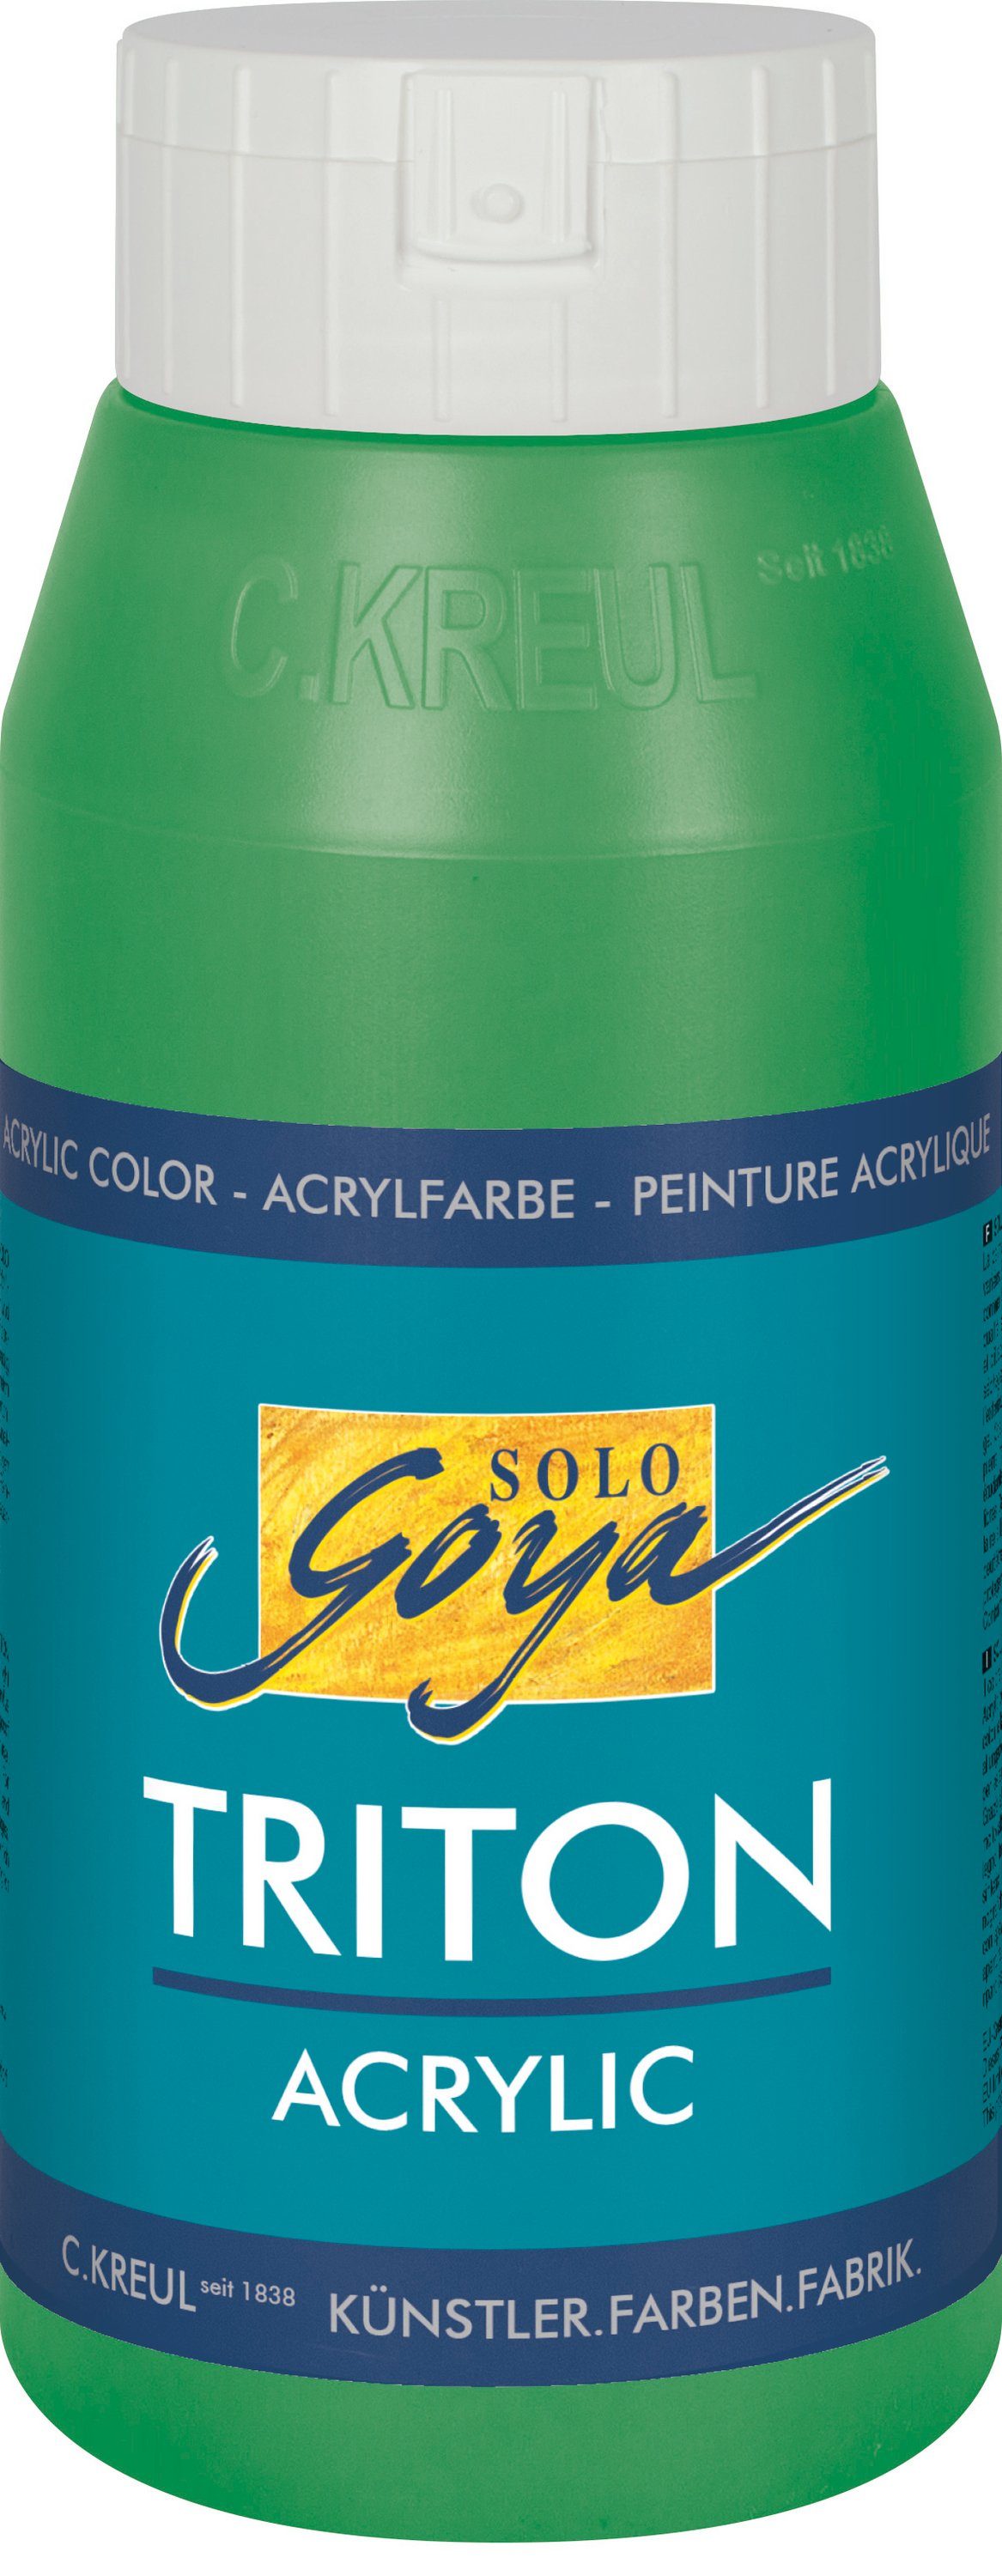 Kreul Acrylfarbe Solo Goya Triton Acrylic, 750 ml Permanent-Grün